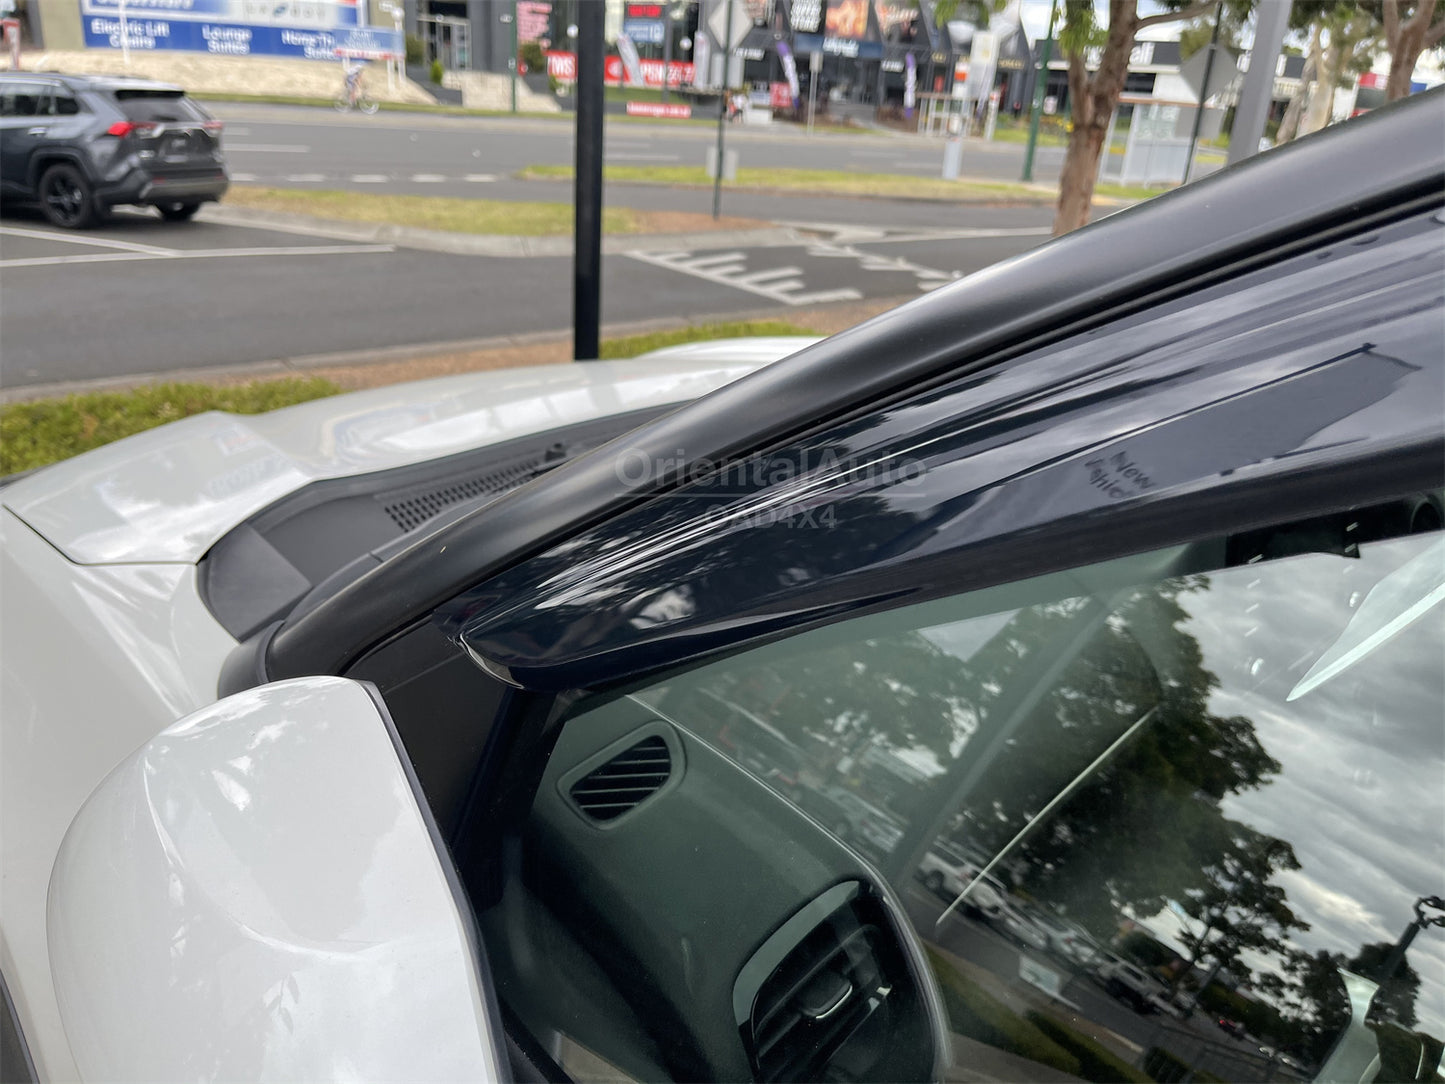 Luxury Weathershields For Toyota Yaris Cross 2020+ Weather Shields Window Visor